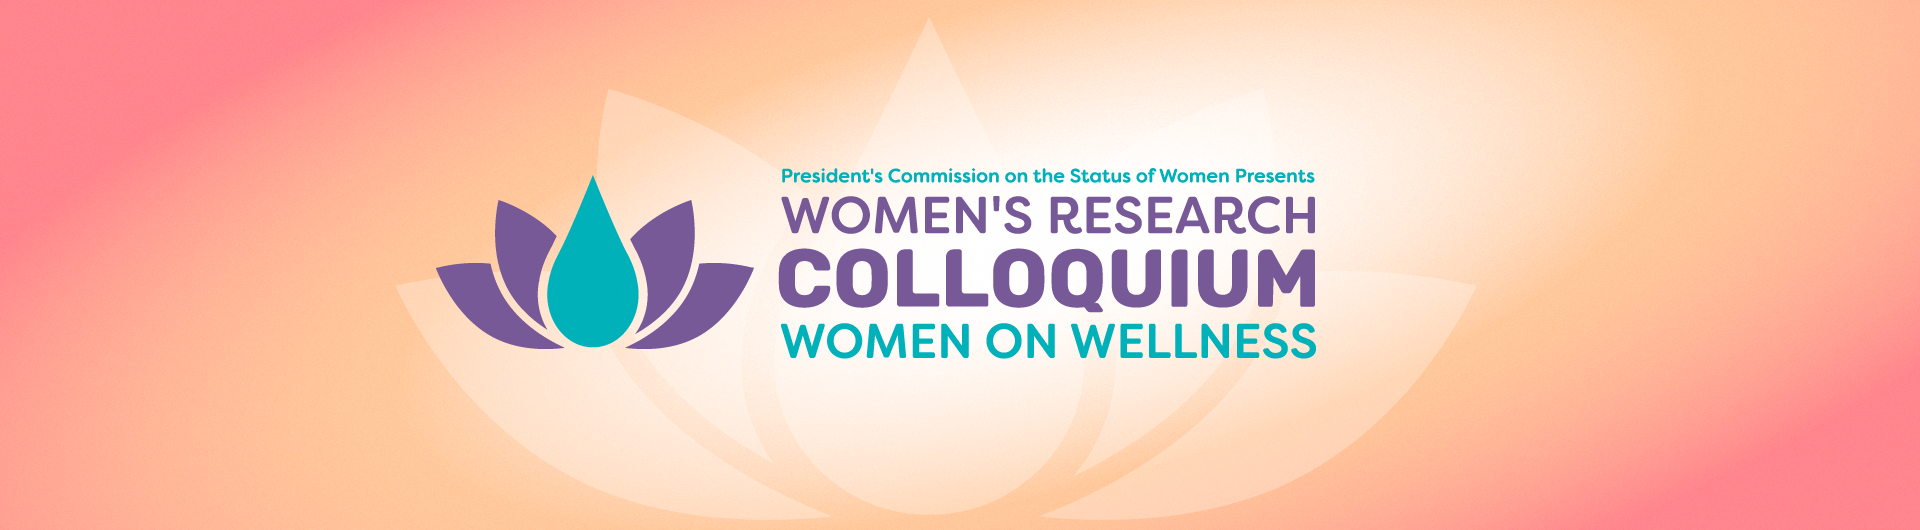 Women's Research Colloquium Banner